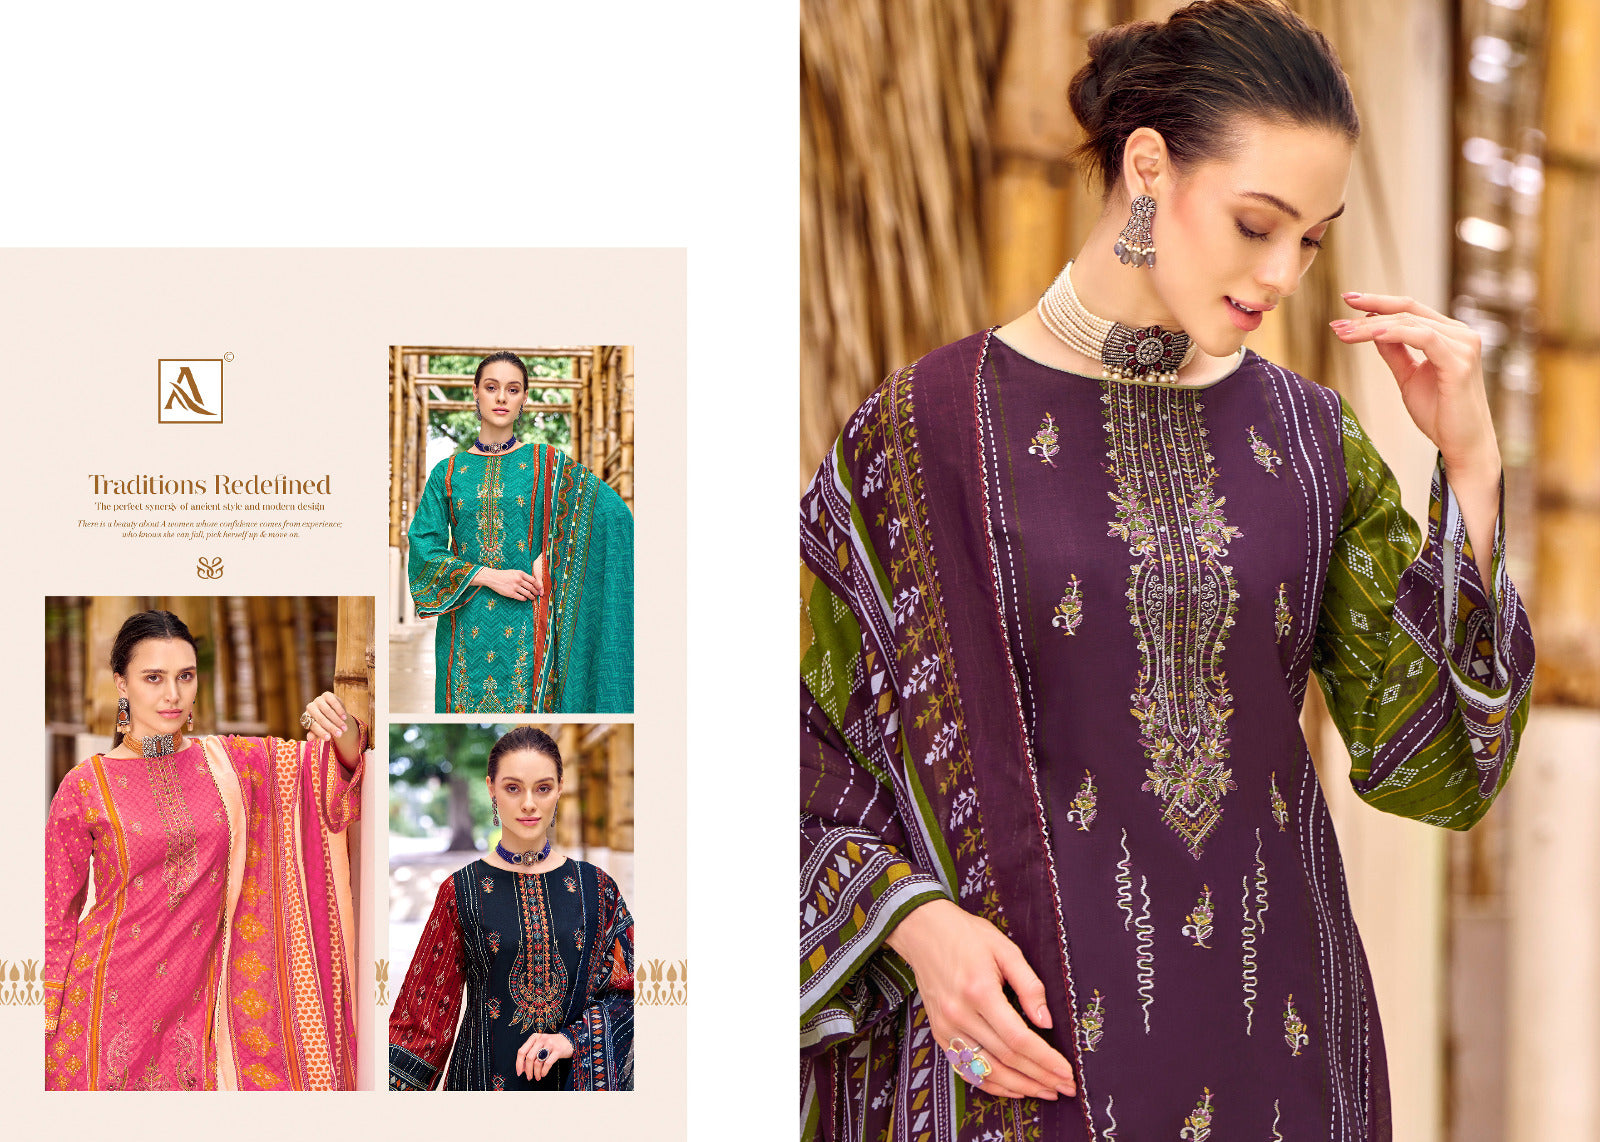 Alok suits sana sara cambric cotton pakistani printed dress material wholesaler in surat - jilaniwholesalesuit